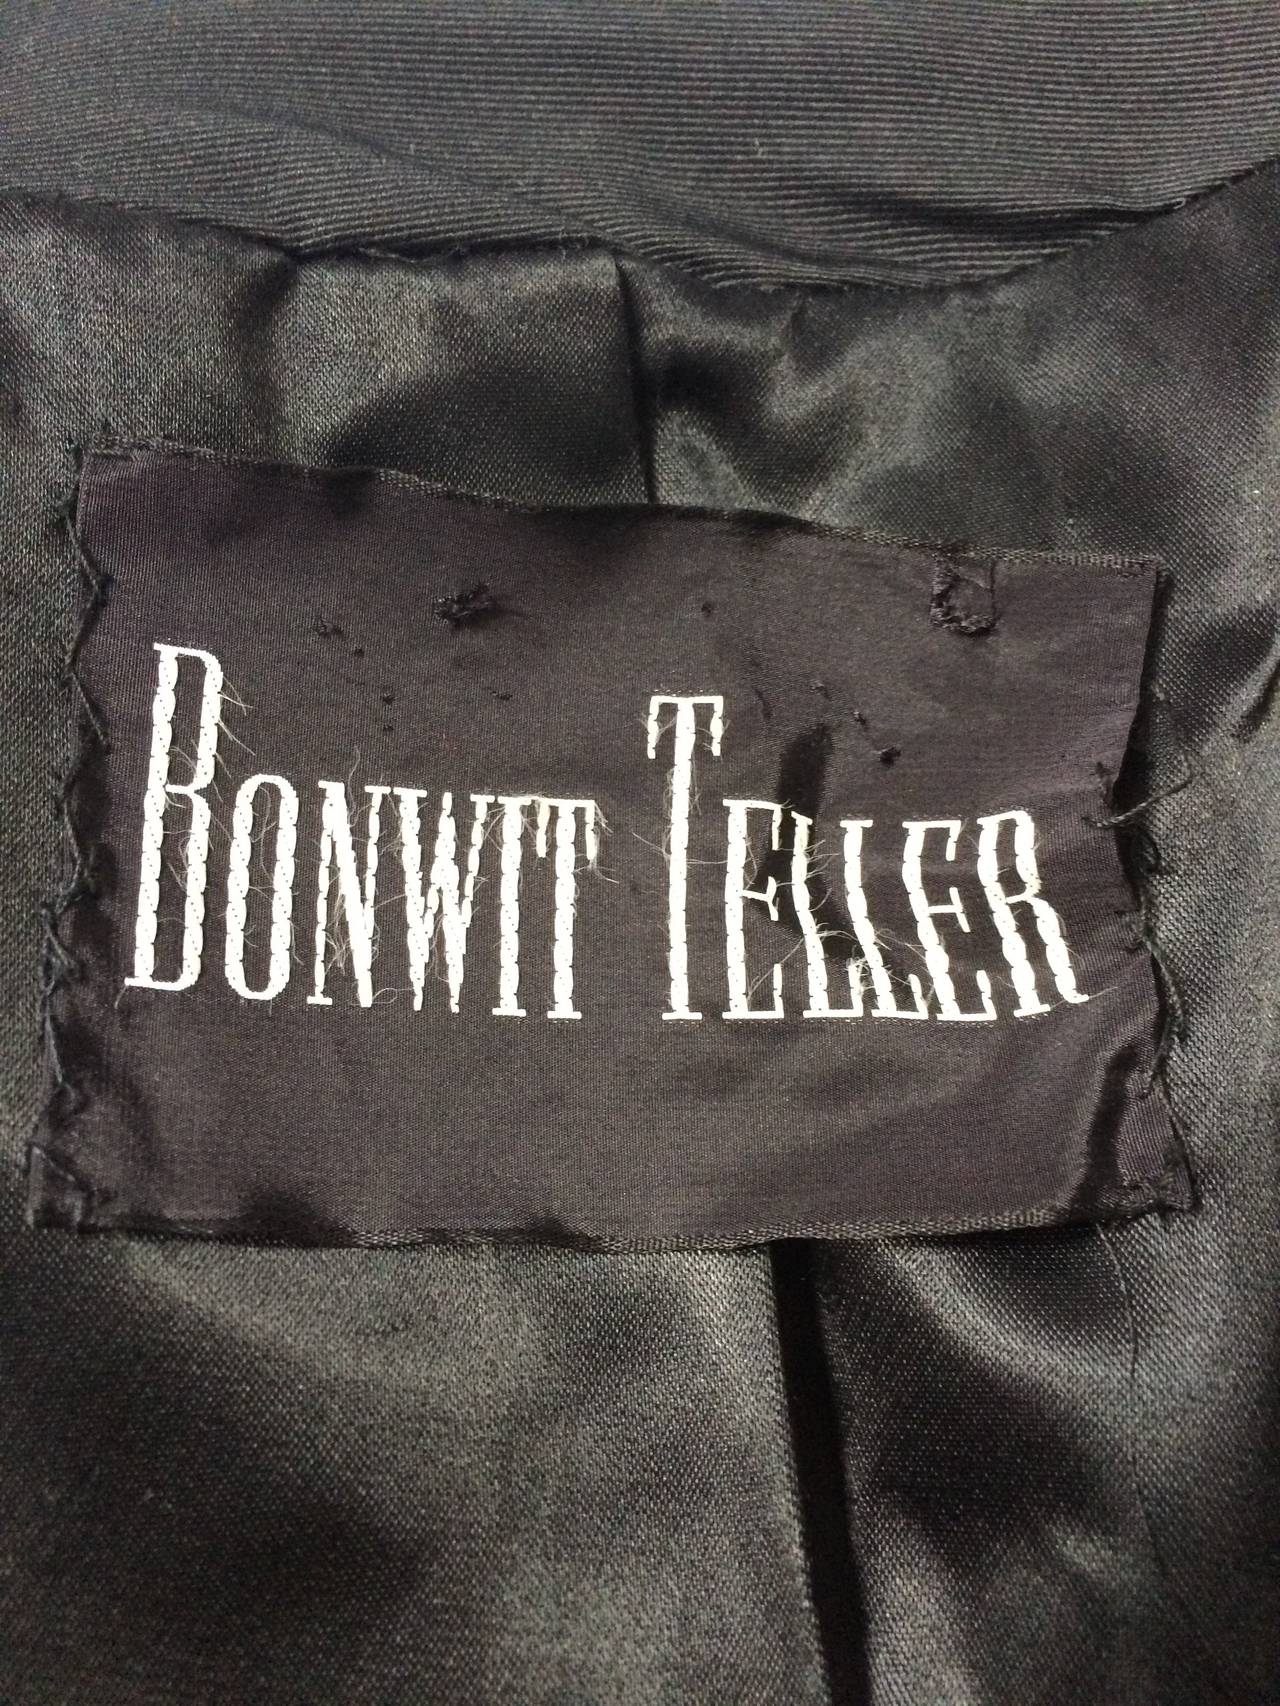 Bonwit Teller Long Black Coat, 1960s   4